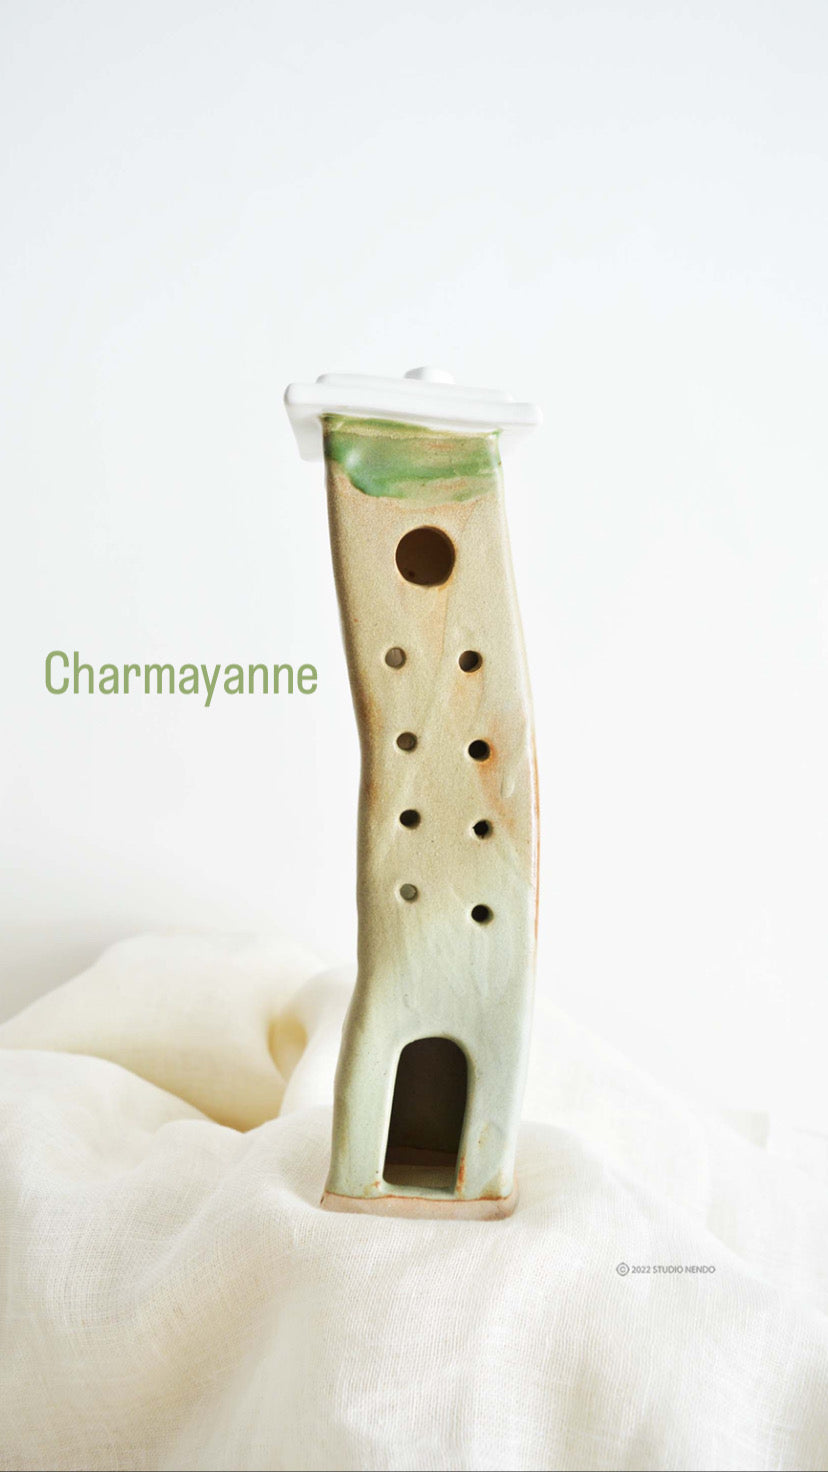 CHARMAYANNE- Topsy Turvy Tealight Housing Society- Ceramic Sculpture